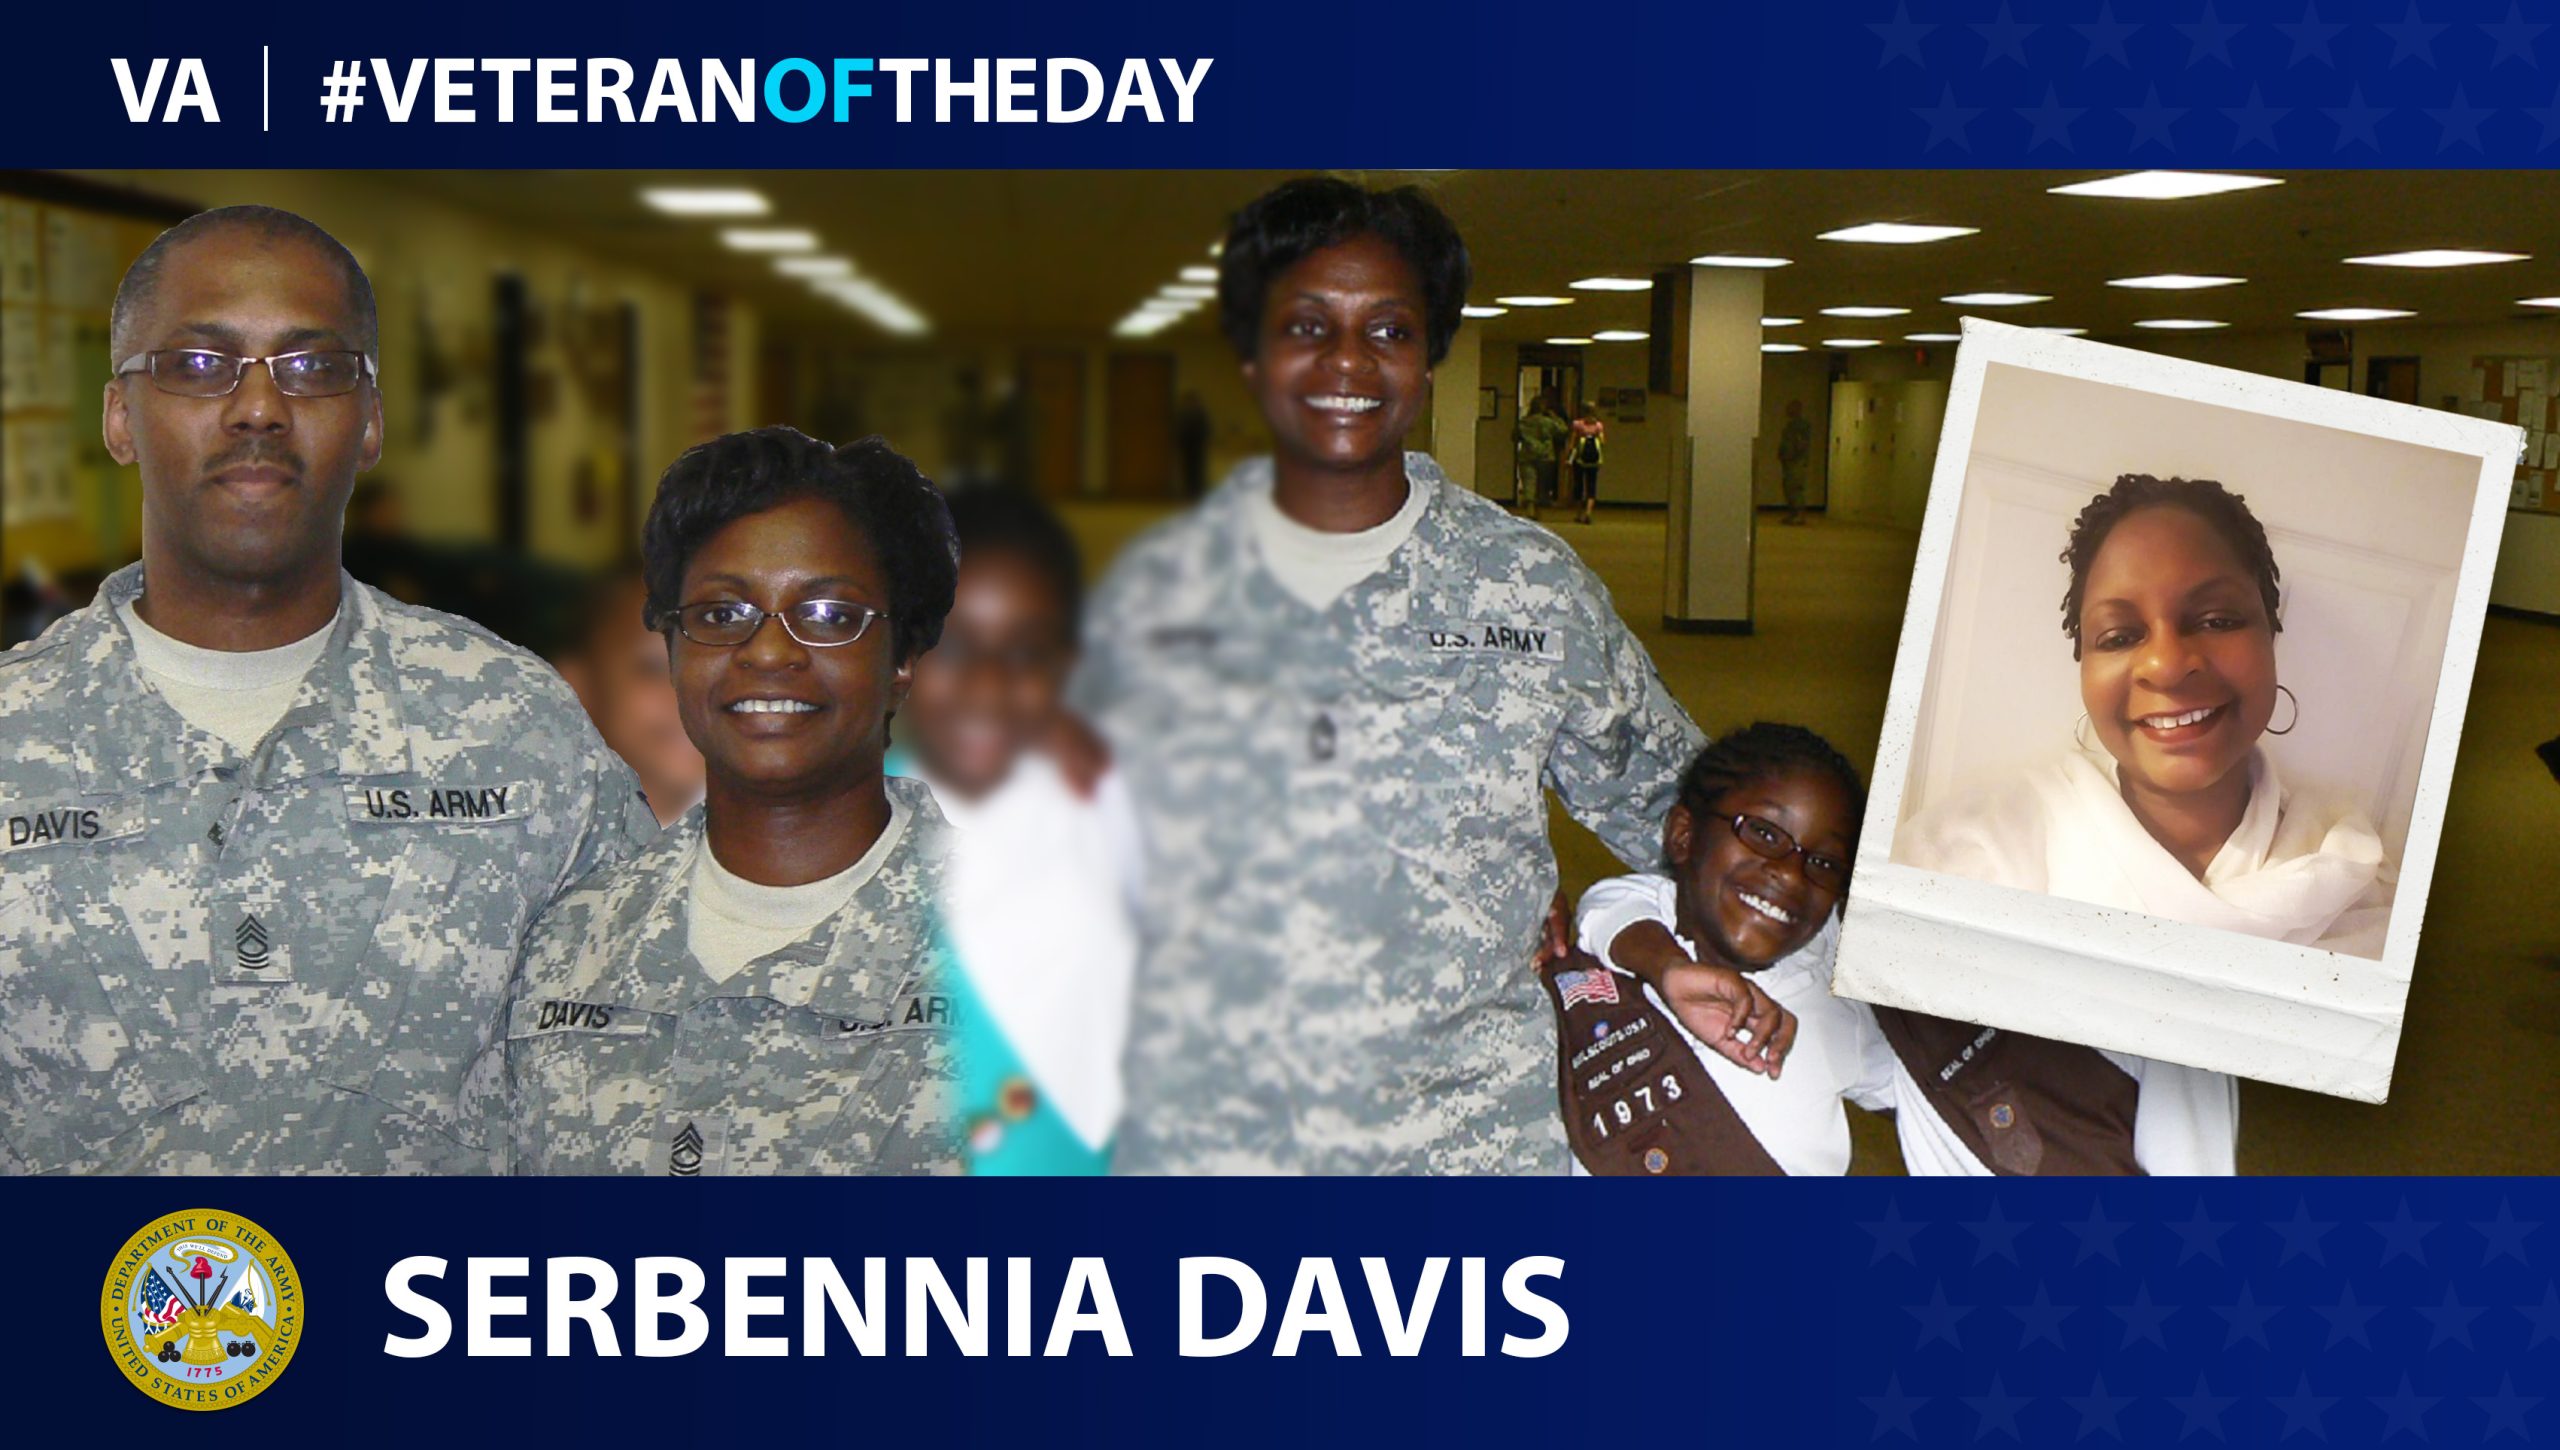 Army Veteran Serbennia Davis is today’s Veteran of the Day.